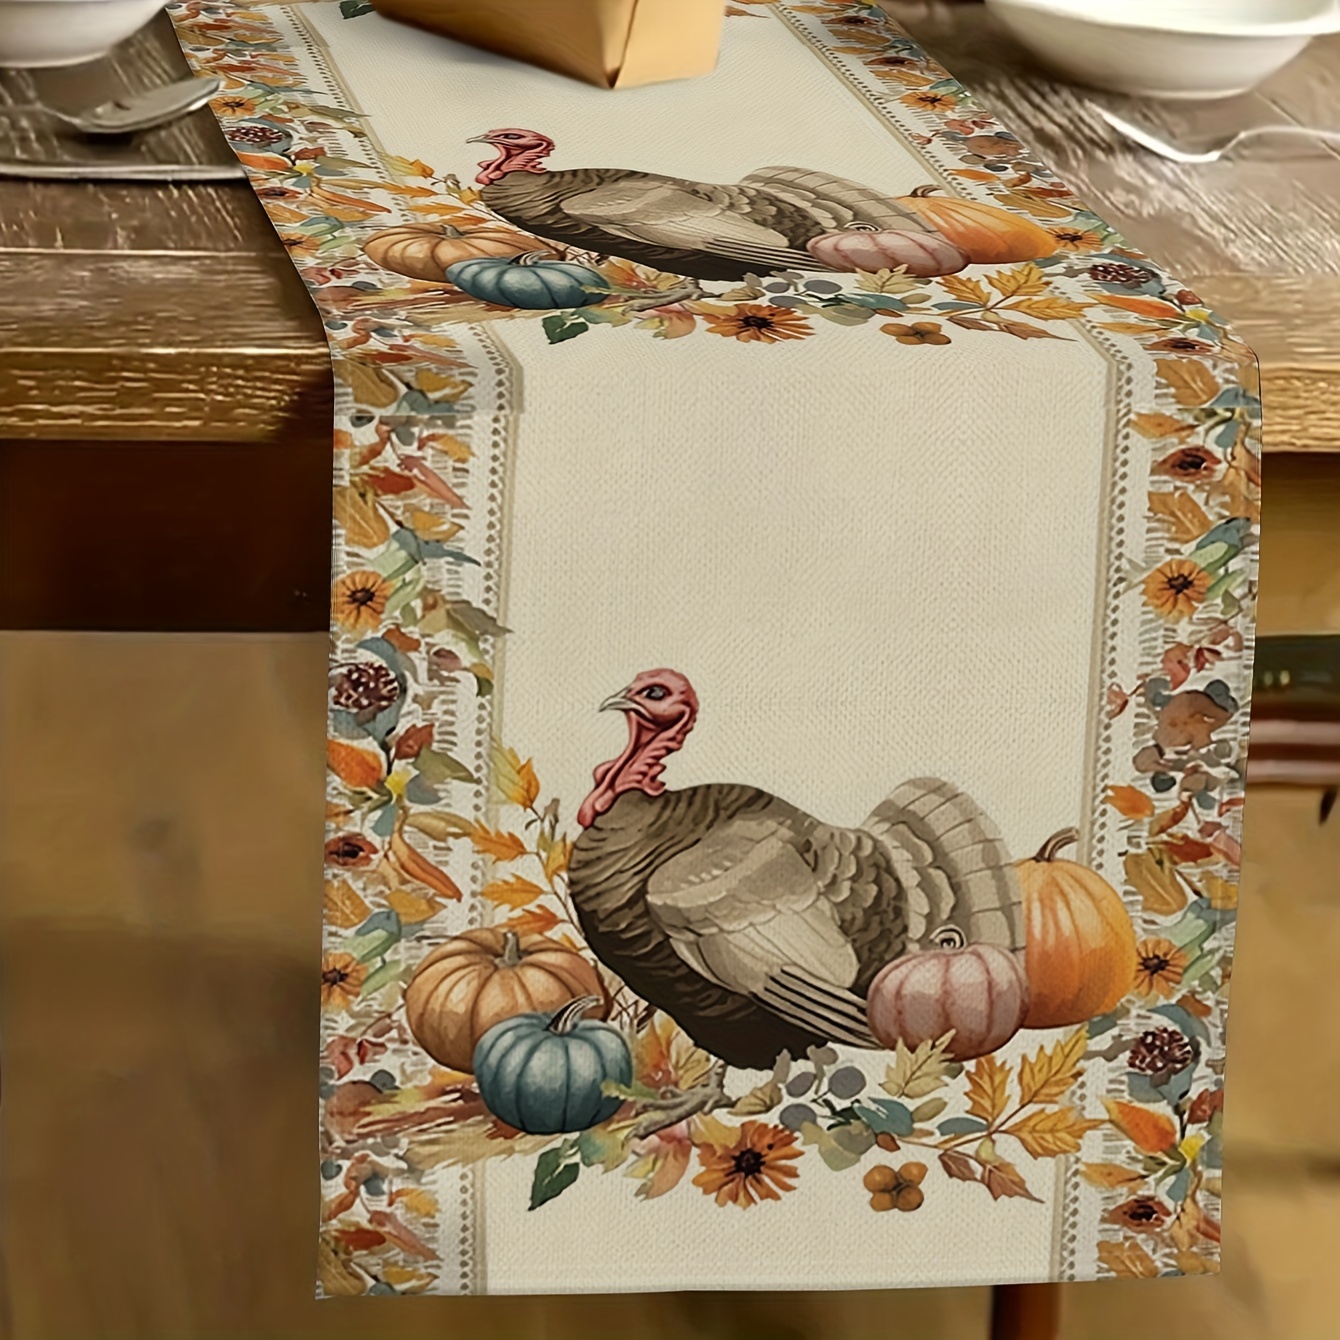 

Thanksgiving Turkey Linen Table Runner - Fall Seasonal Home & Party Decor, Indoor/outdoor Use